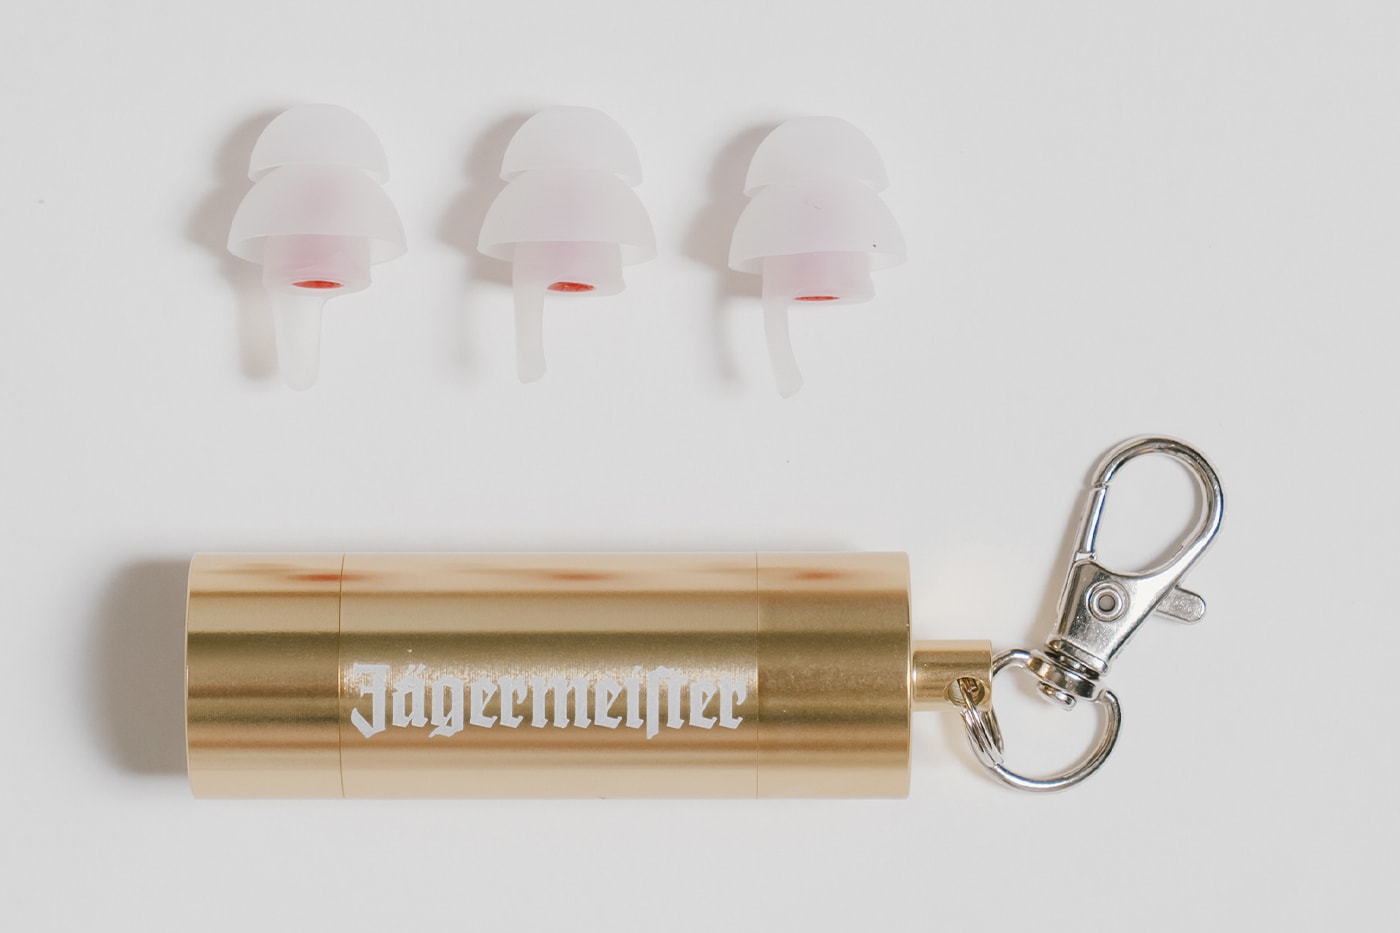 Jägermeister SENSORY VOYAGE Release Info Date Buy Price 